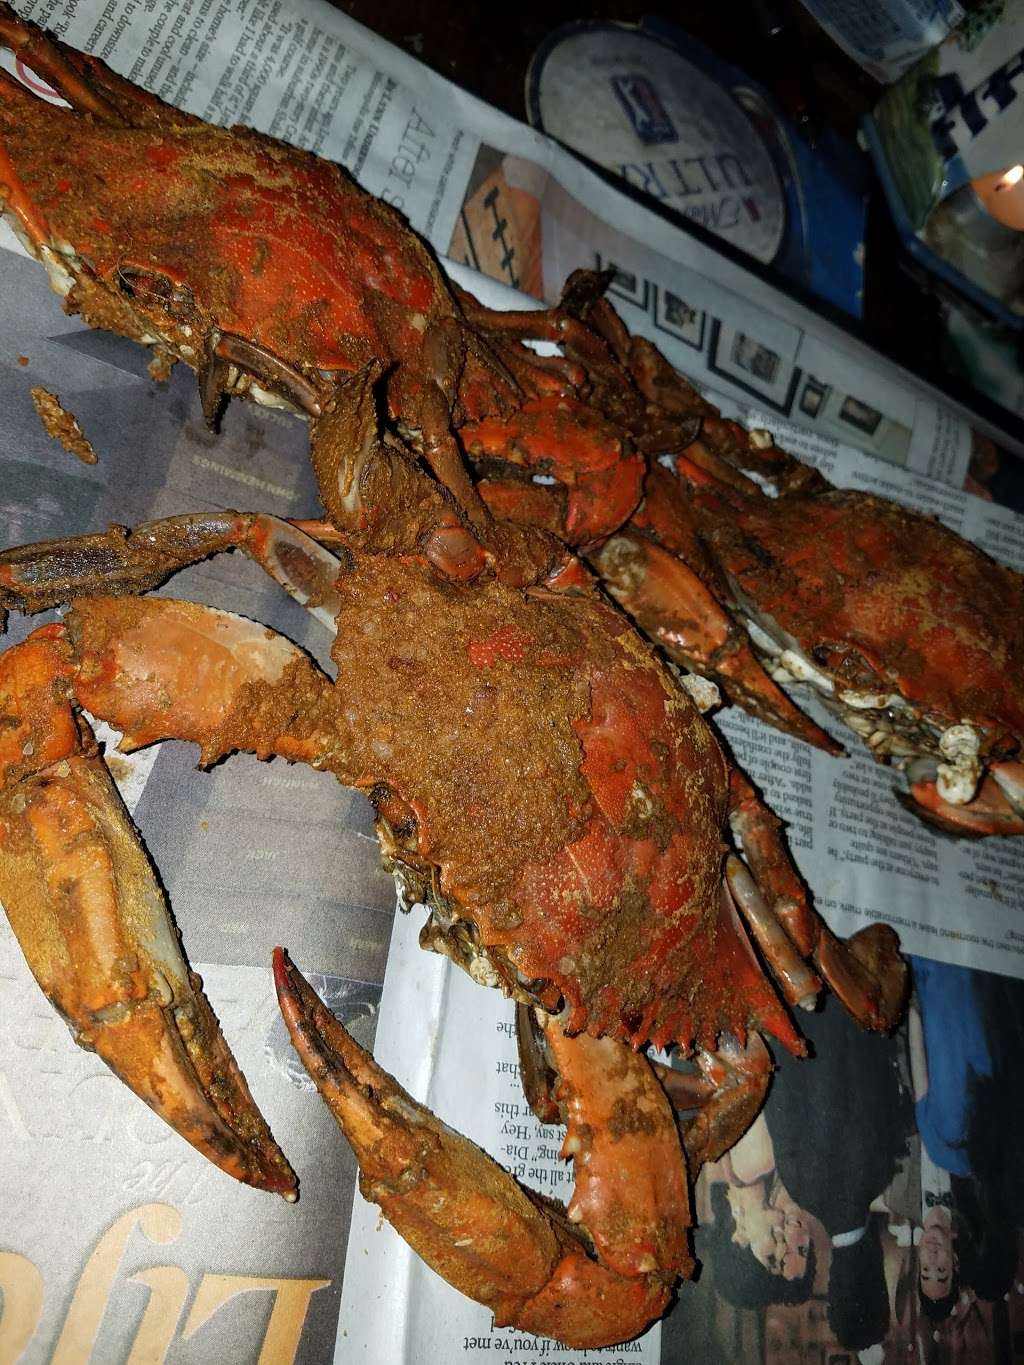 Kent Island Crab Co | 2905 Mountain Rd, Pasadena, MD 21122, USA | Phone: (410) 437-2155